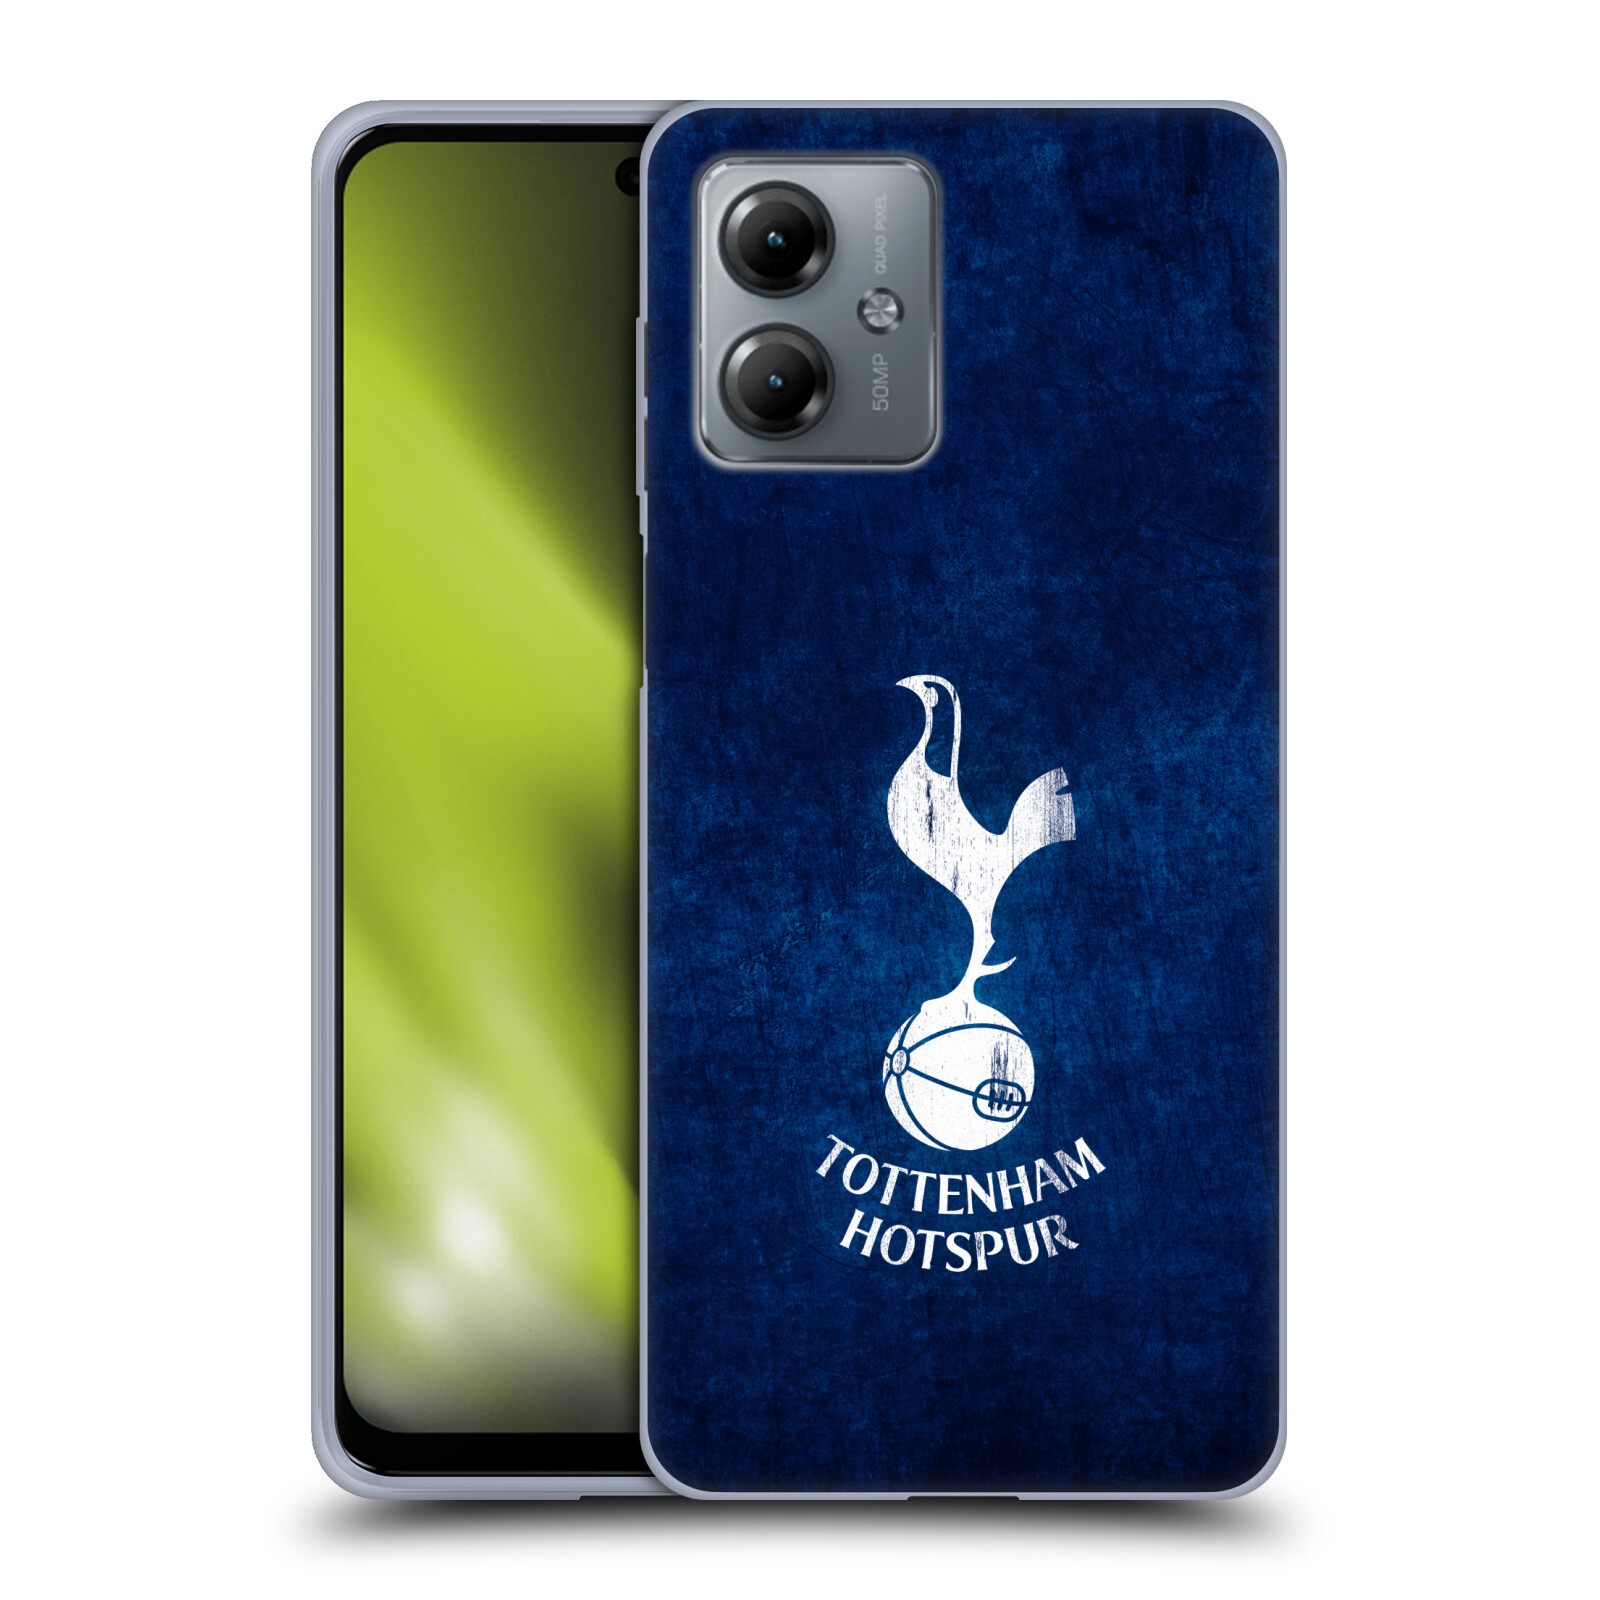 Silikonové pouzdro na mobil Motorola Moto G14 - Tottenham Hotspur F.C. (Silikonový kryt, obal, pouzdro na mobilní telefon Motorola Moto G14 s licencovaným motivem Tottenham Hotspur F.C.)